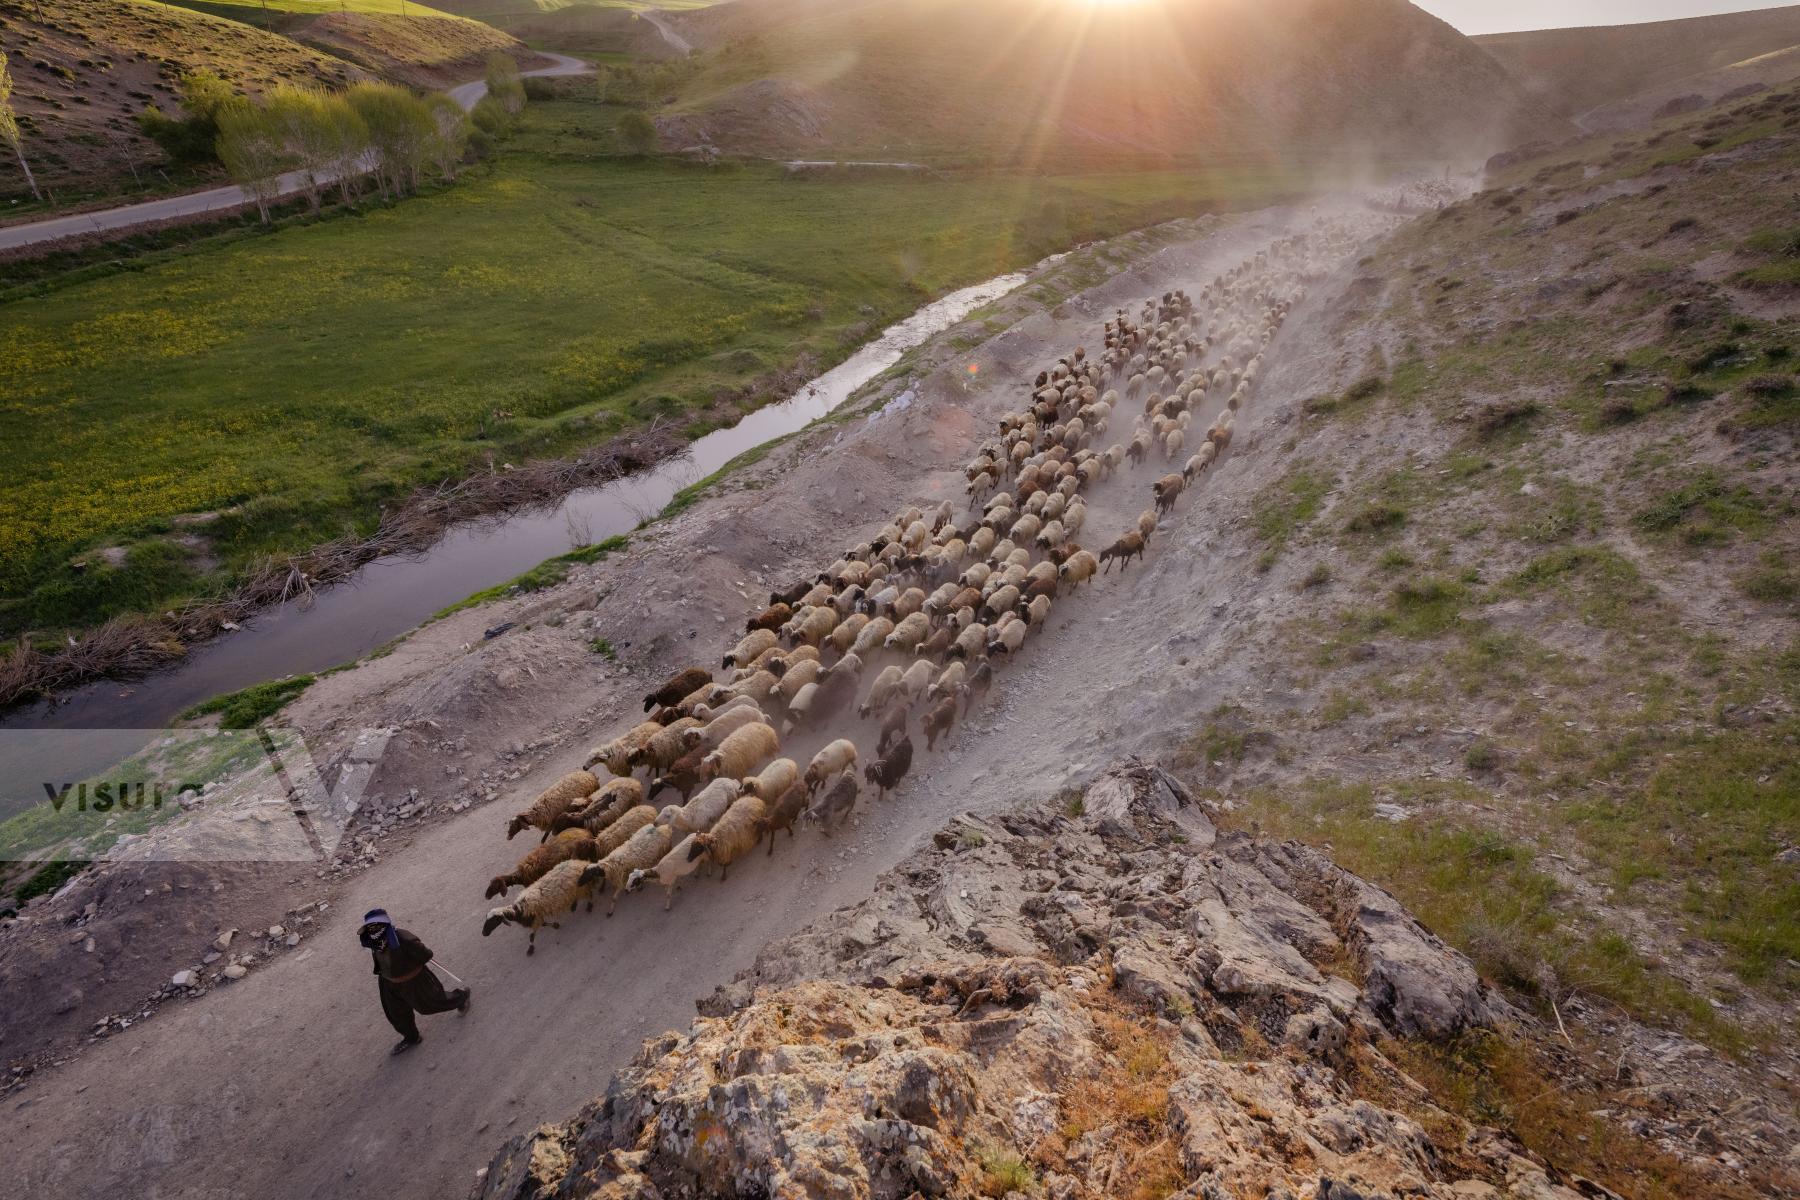 Purchase flock of sheep by Sayed Habib Bidell